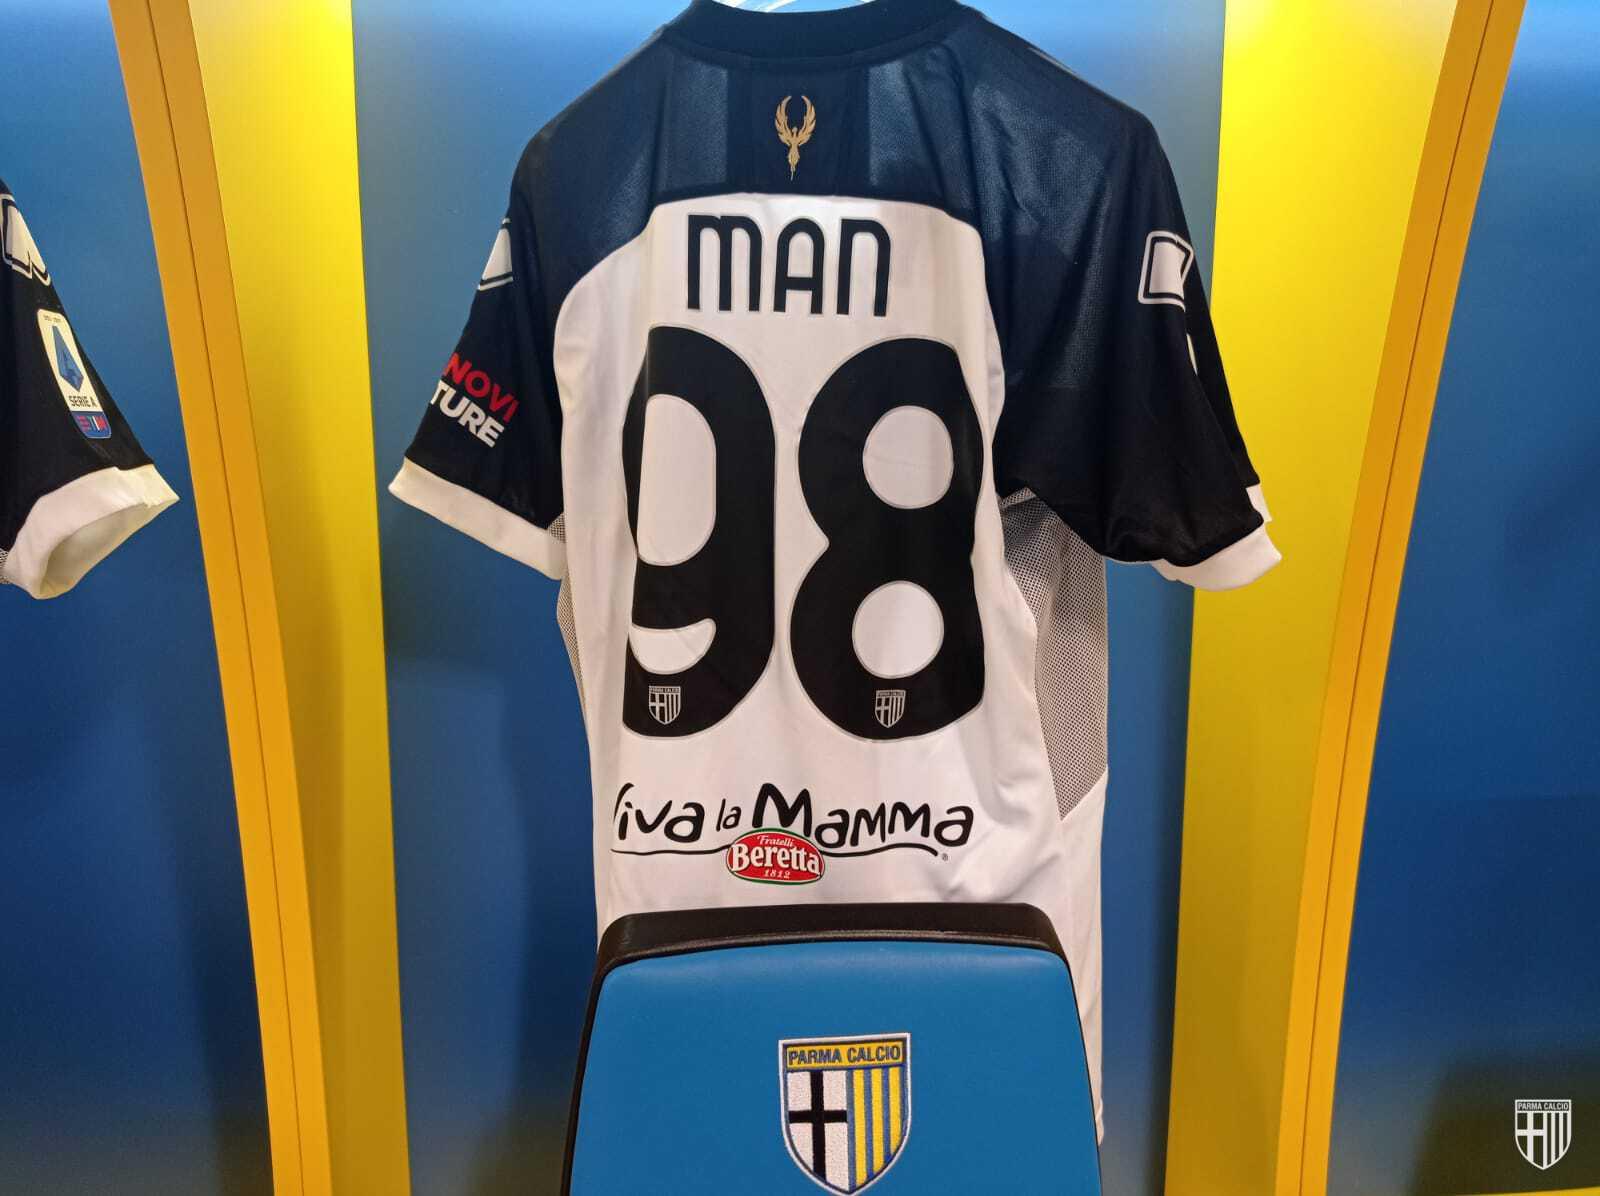 Dennis Man tricoul, sursa foto-Parma/Facebook